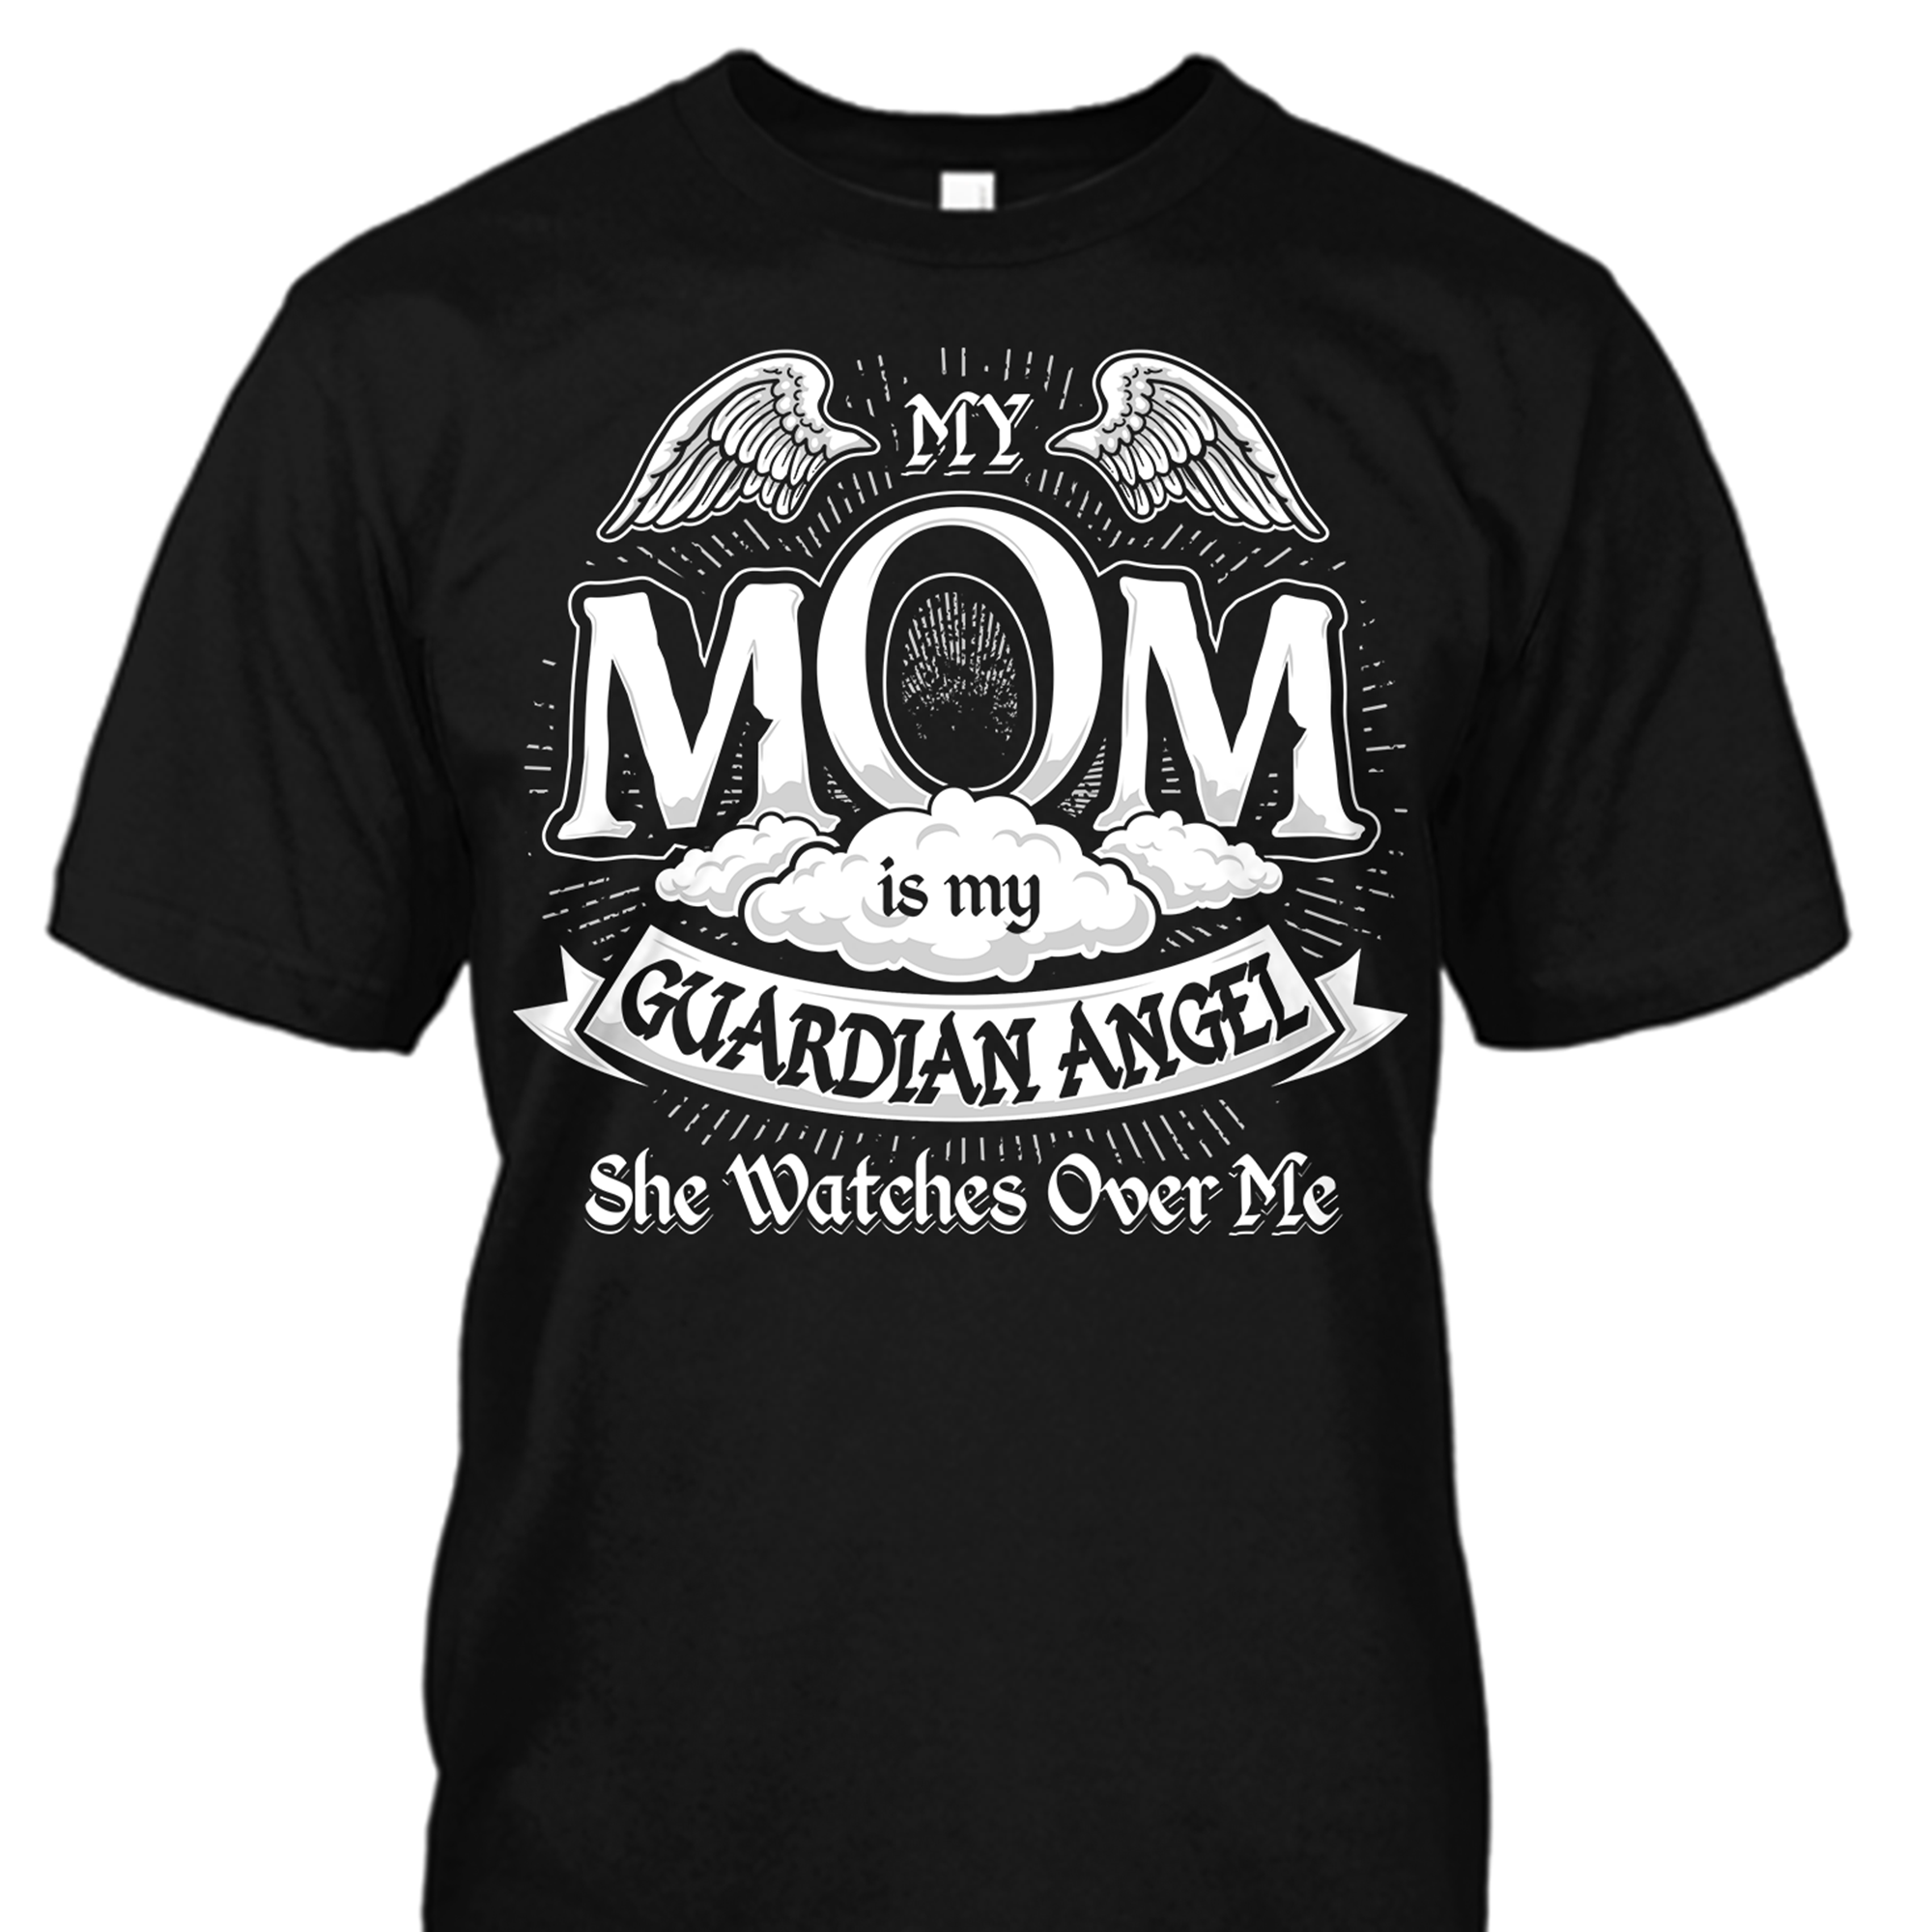 My Mom is My Guardian Angel Shirt